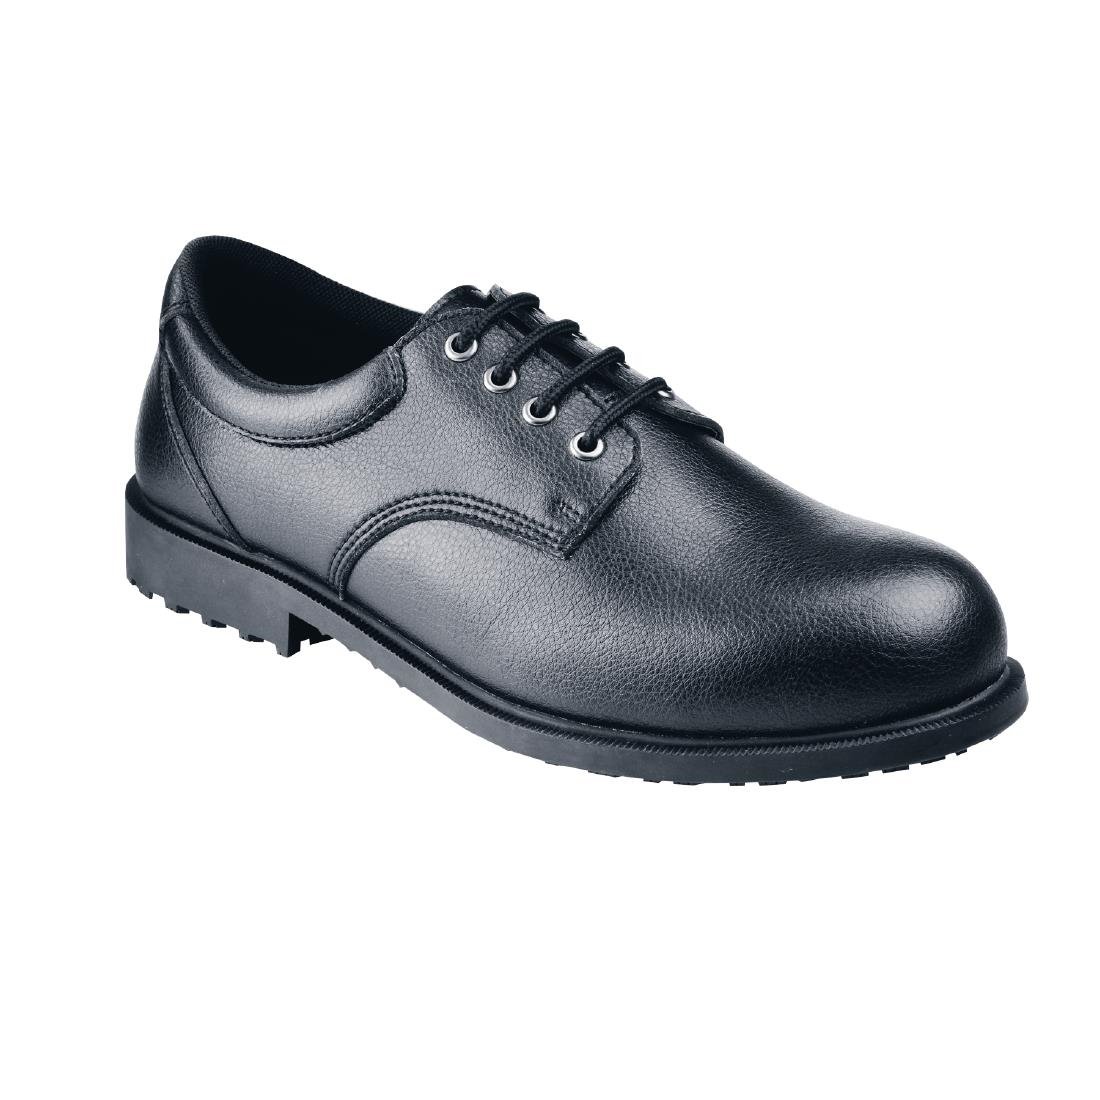 BB611-40 Shoes for Crews Cambridge Steel Toe Dress Shoe Size 40